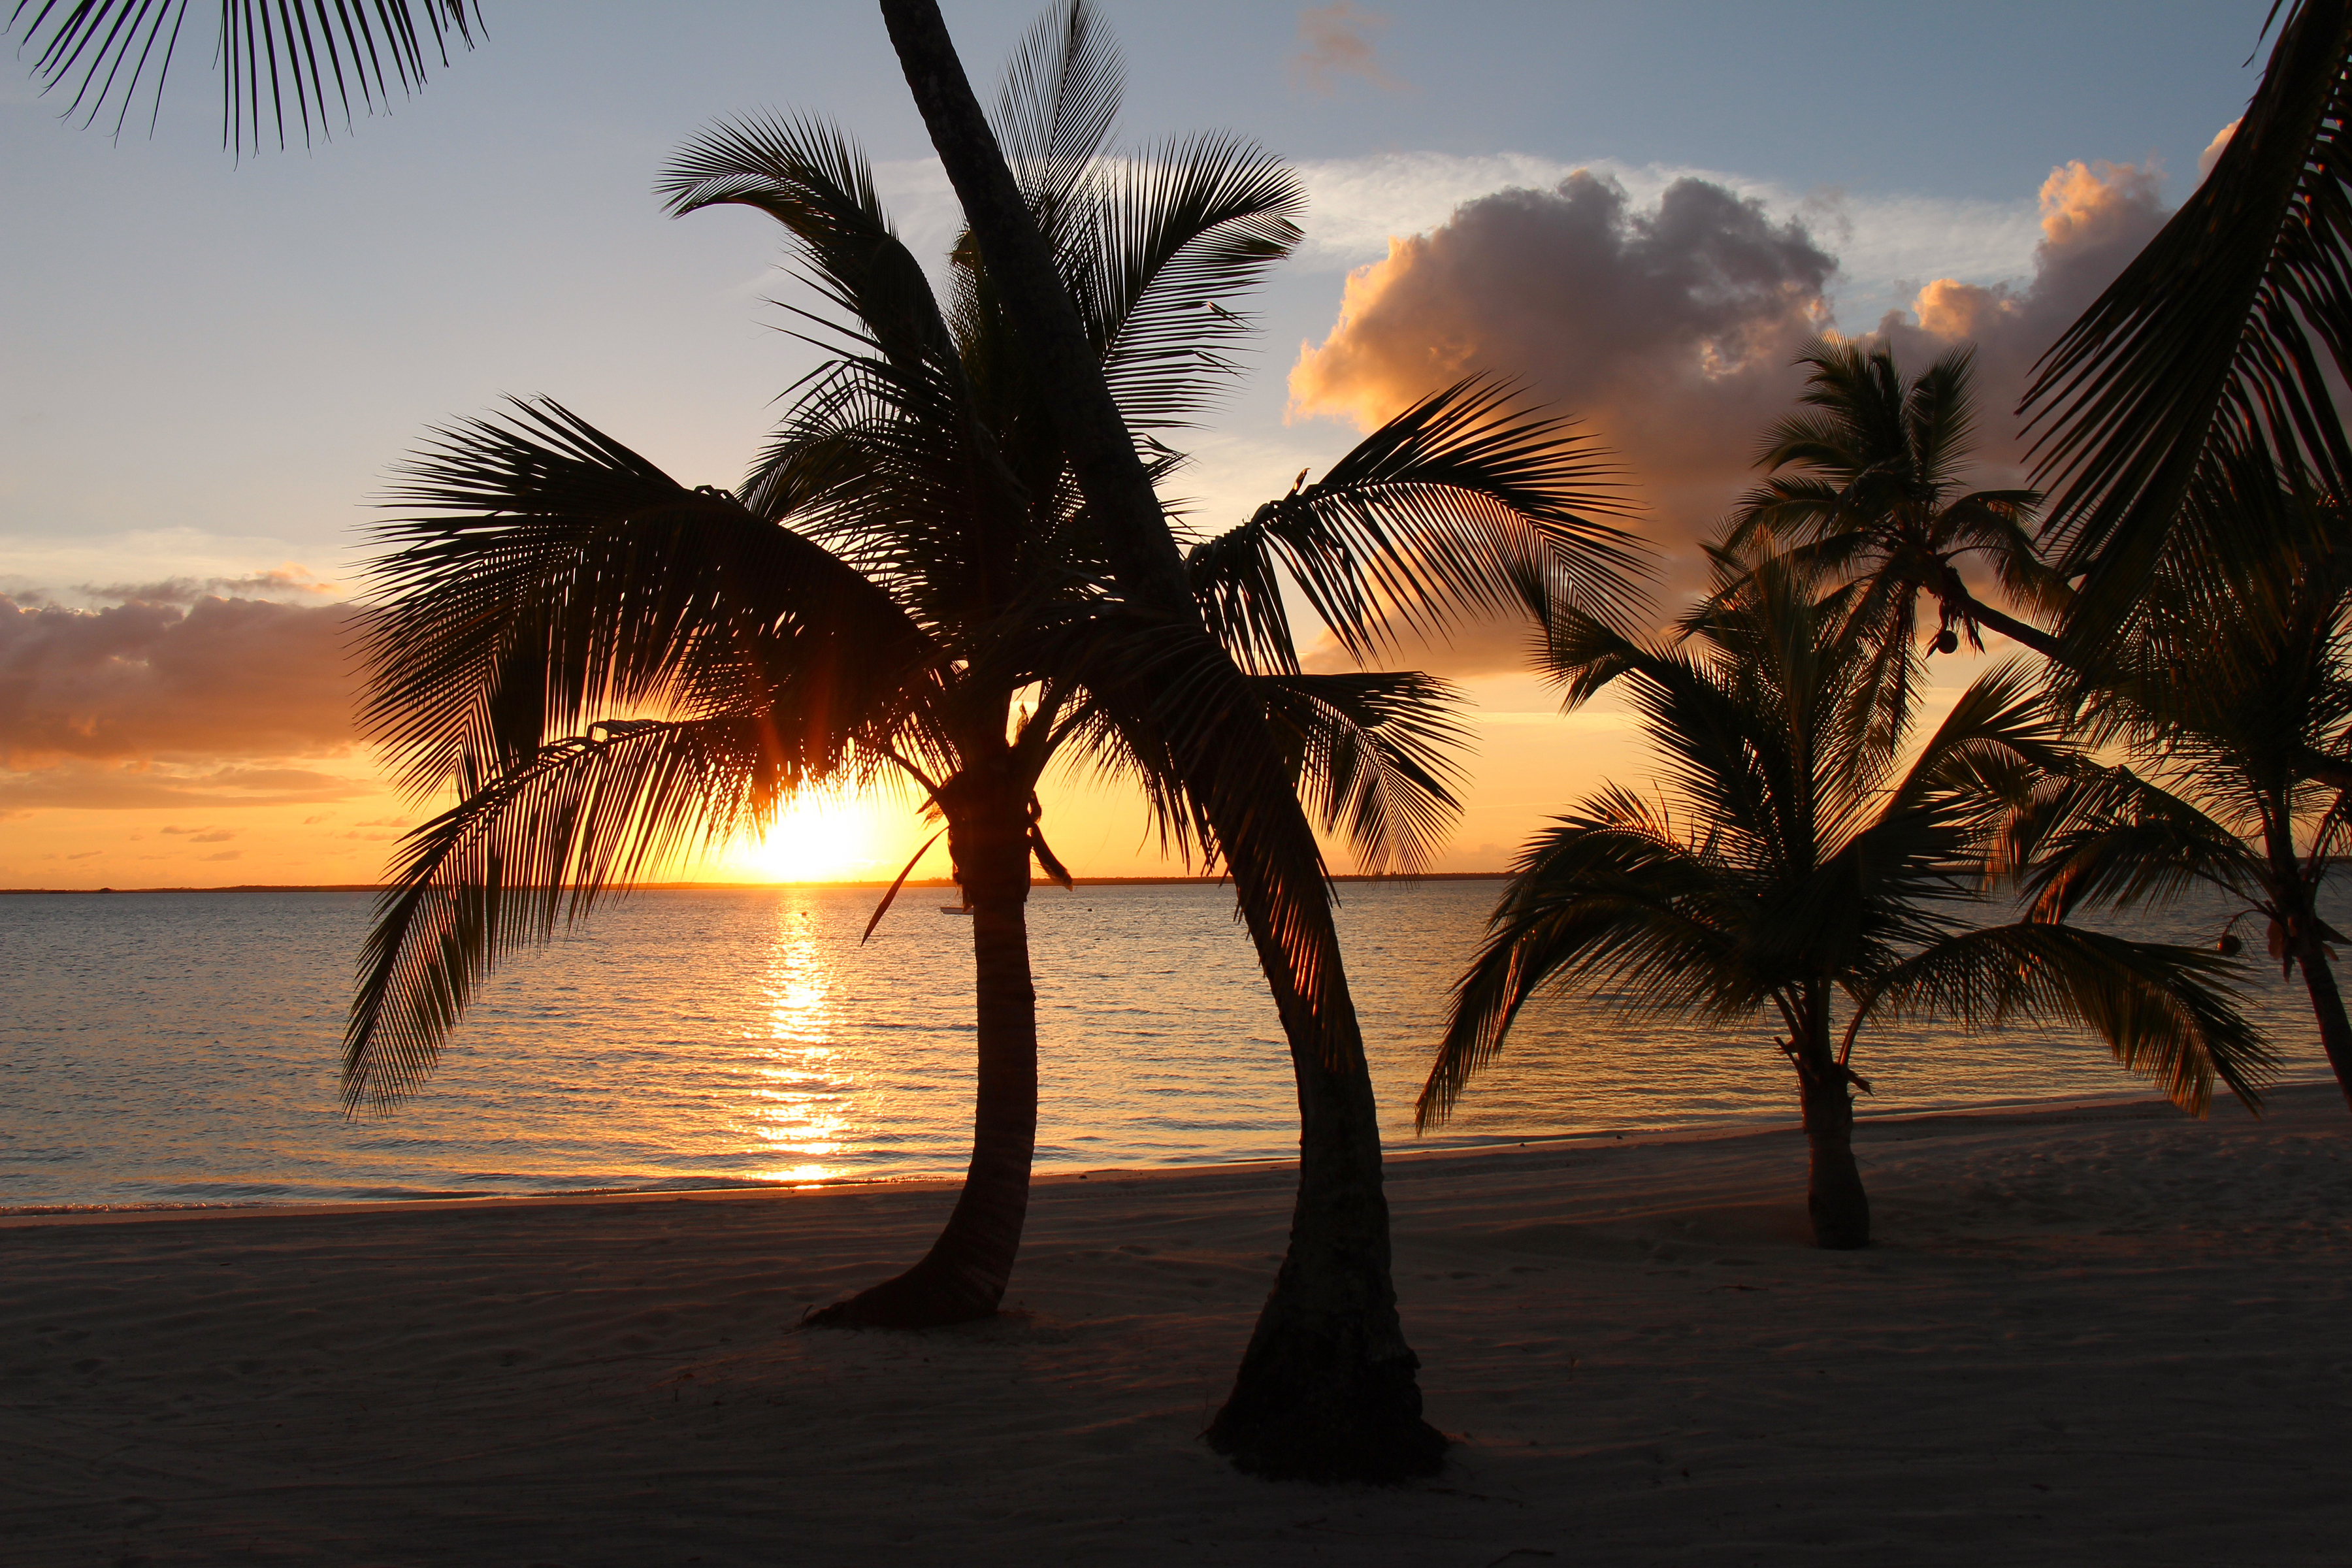 Фото с пальмами и морем